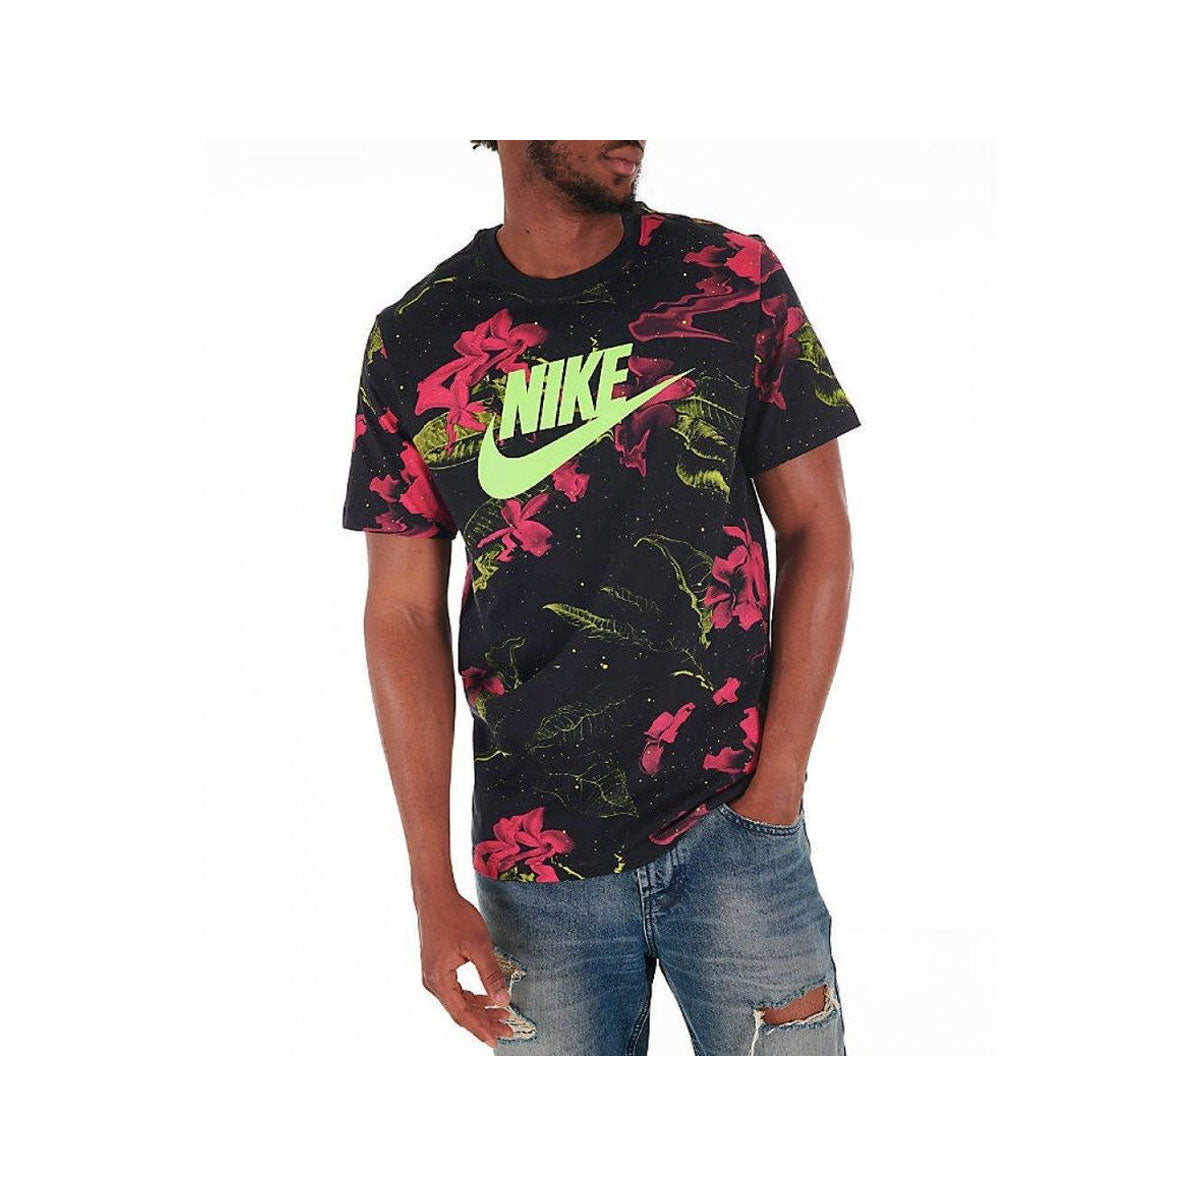 Nike Men's Pink Limeade T-Shirt Black 